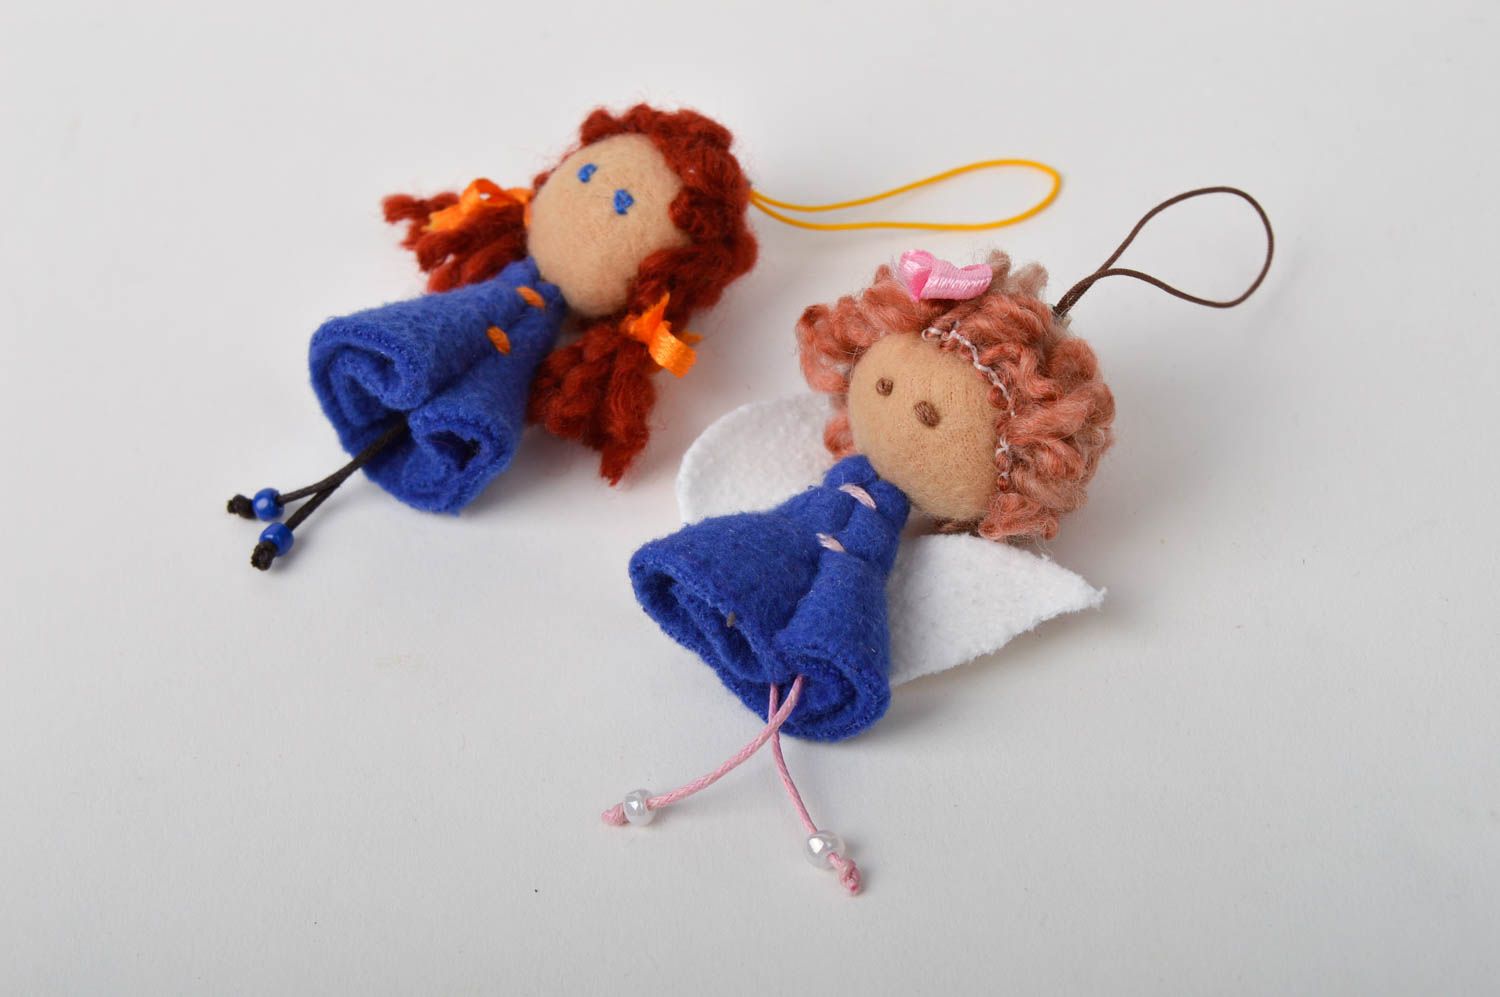 Handmade key chain unusual dolls gift ideas set of 2 items textile toys photo 1